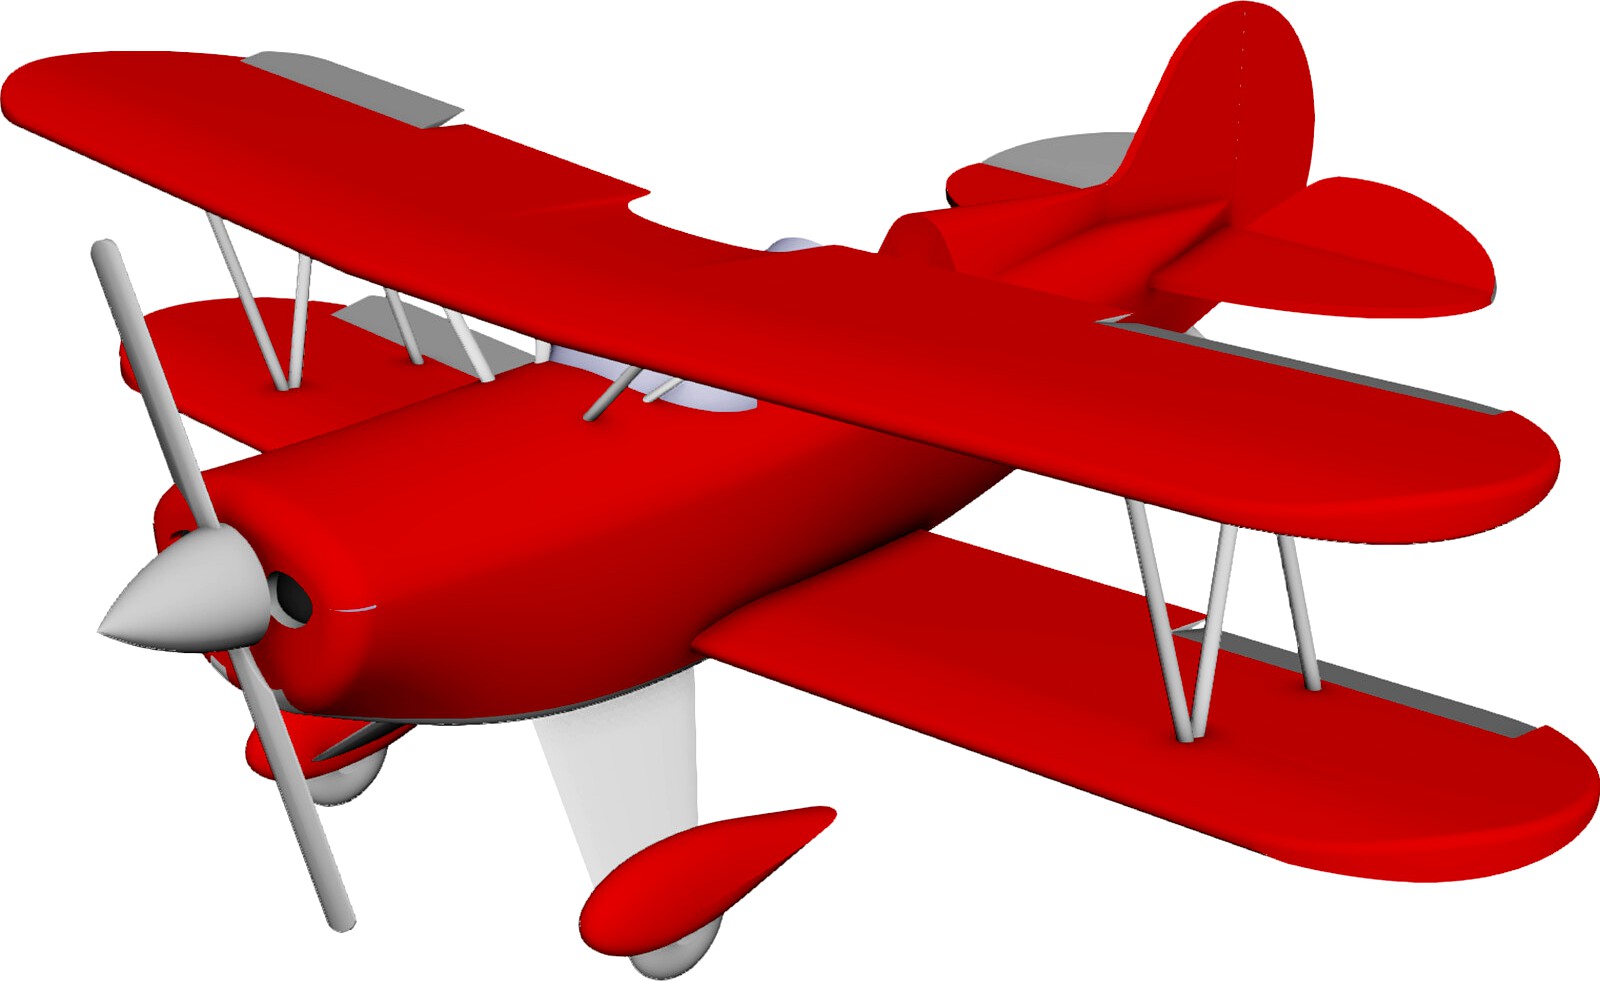 SPAD S.XIII Biplane 3D CAD Model